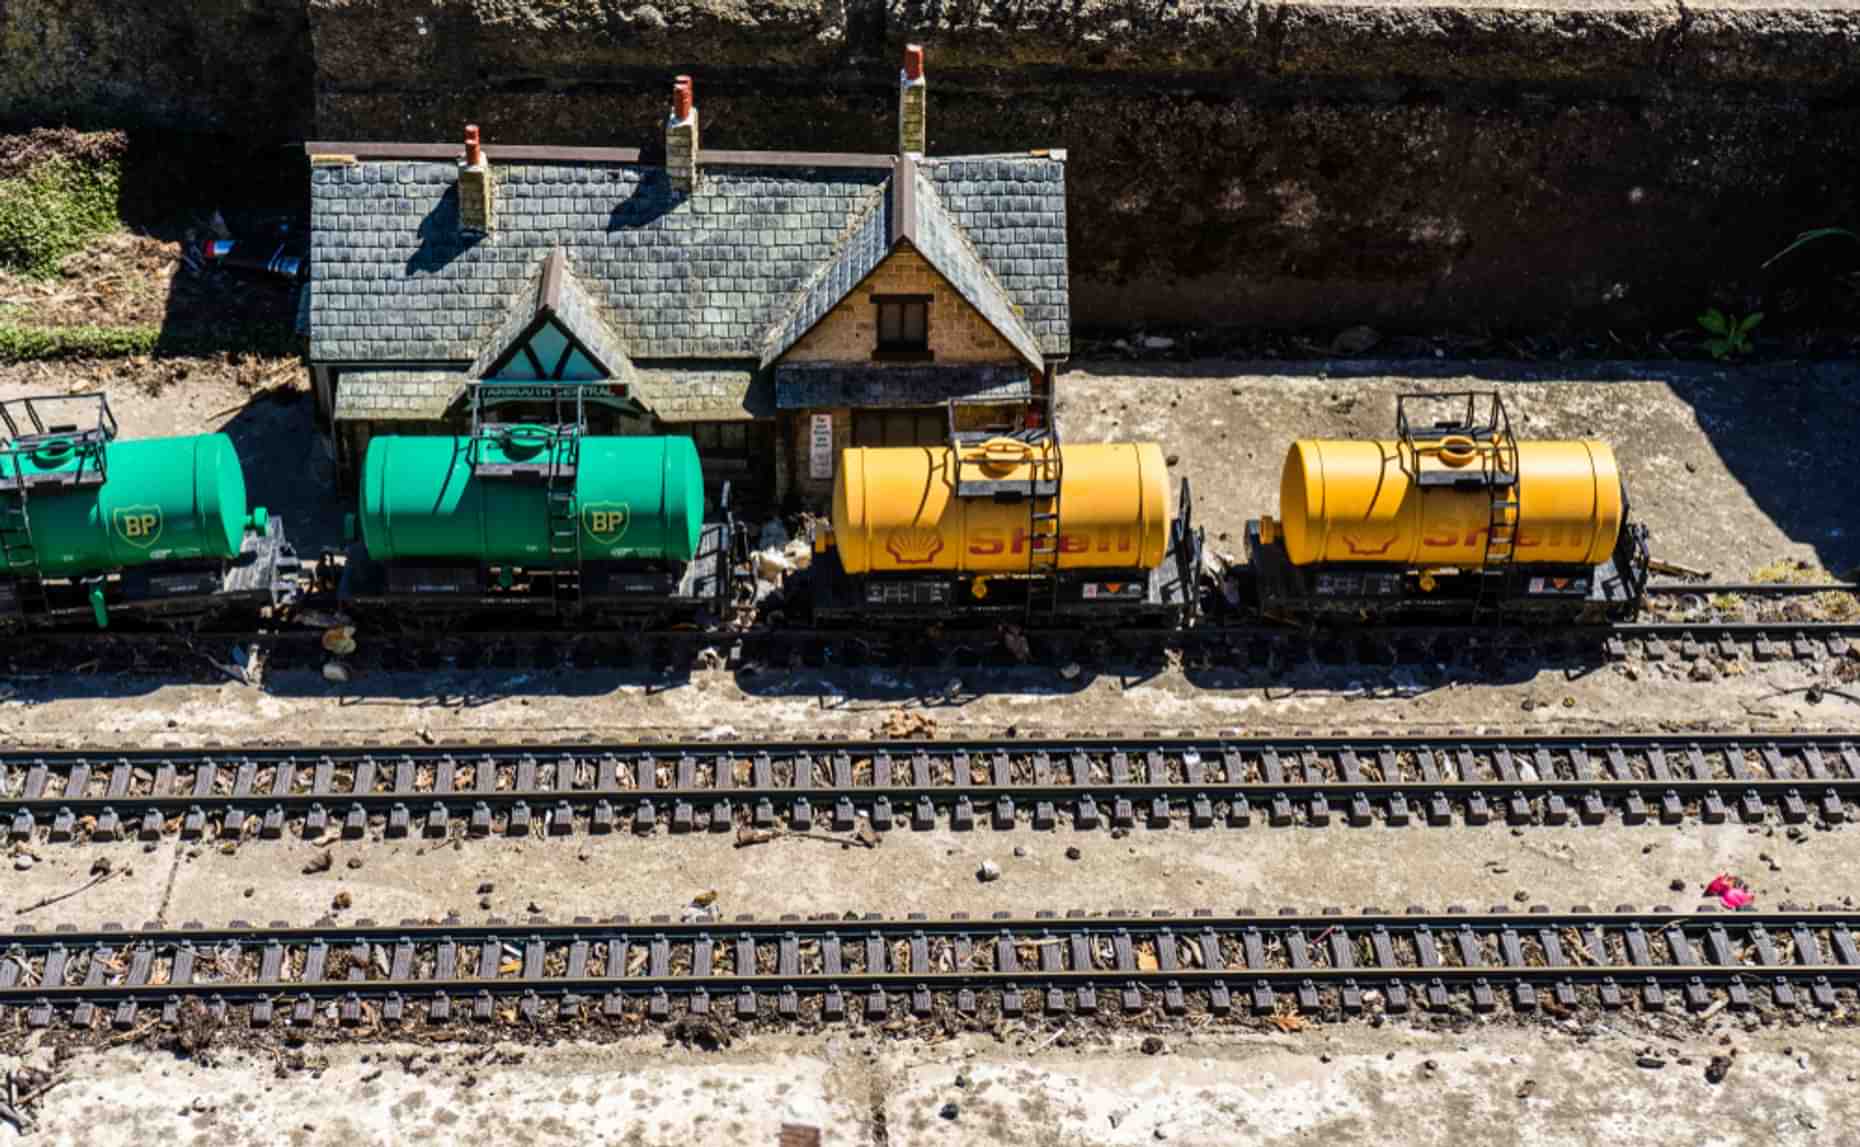 Merrivale Model Railway